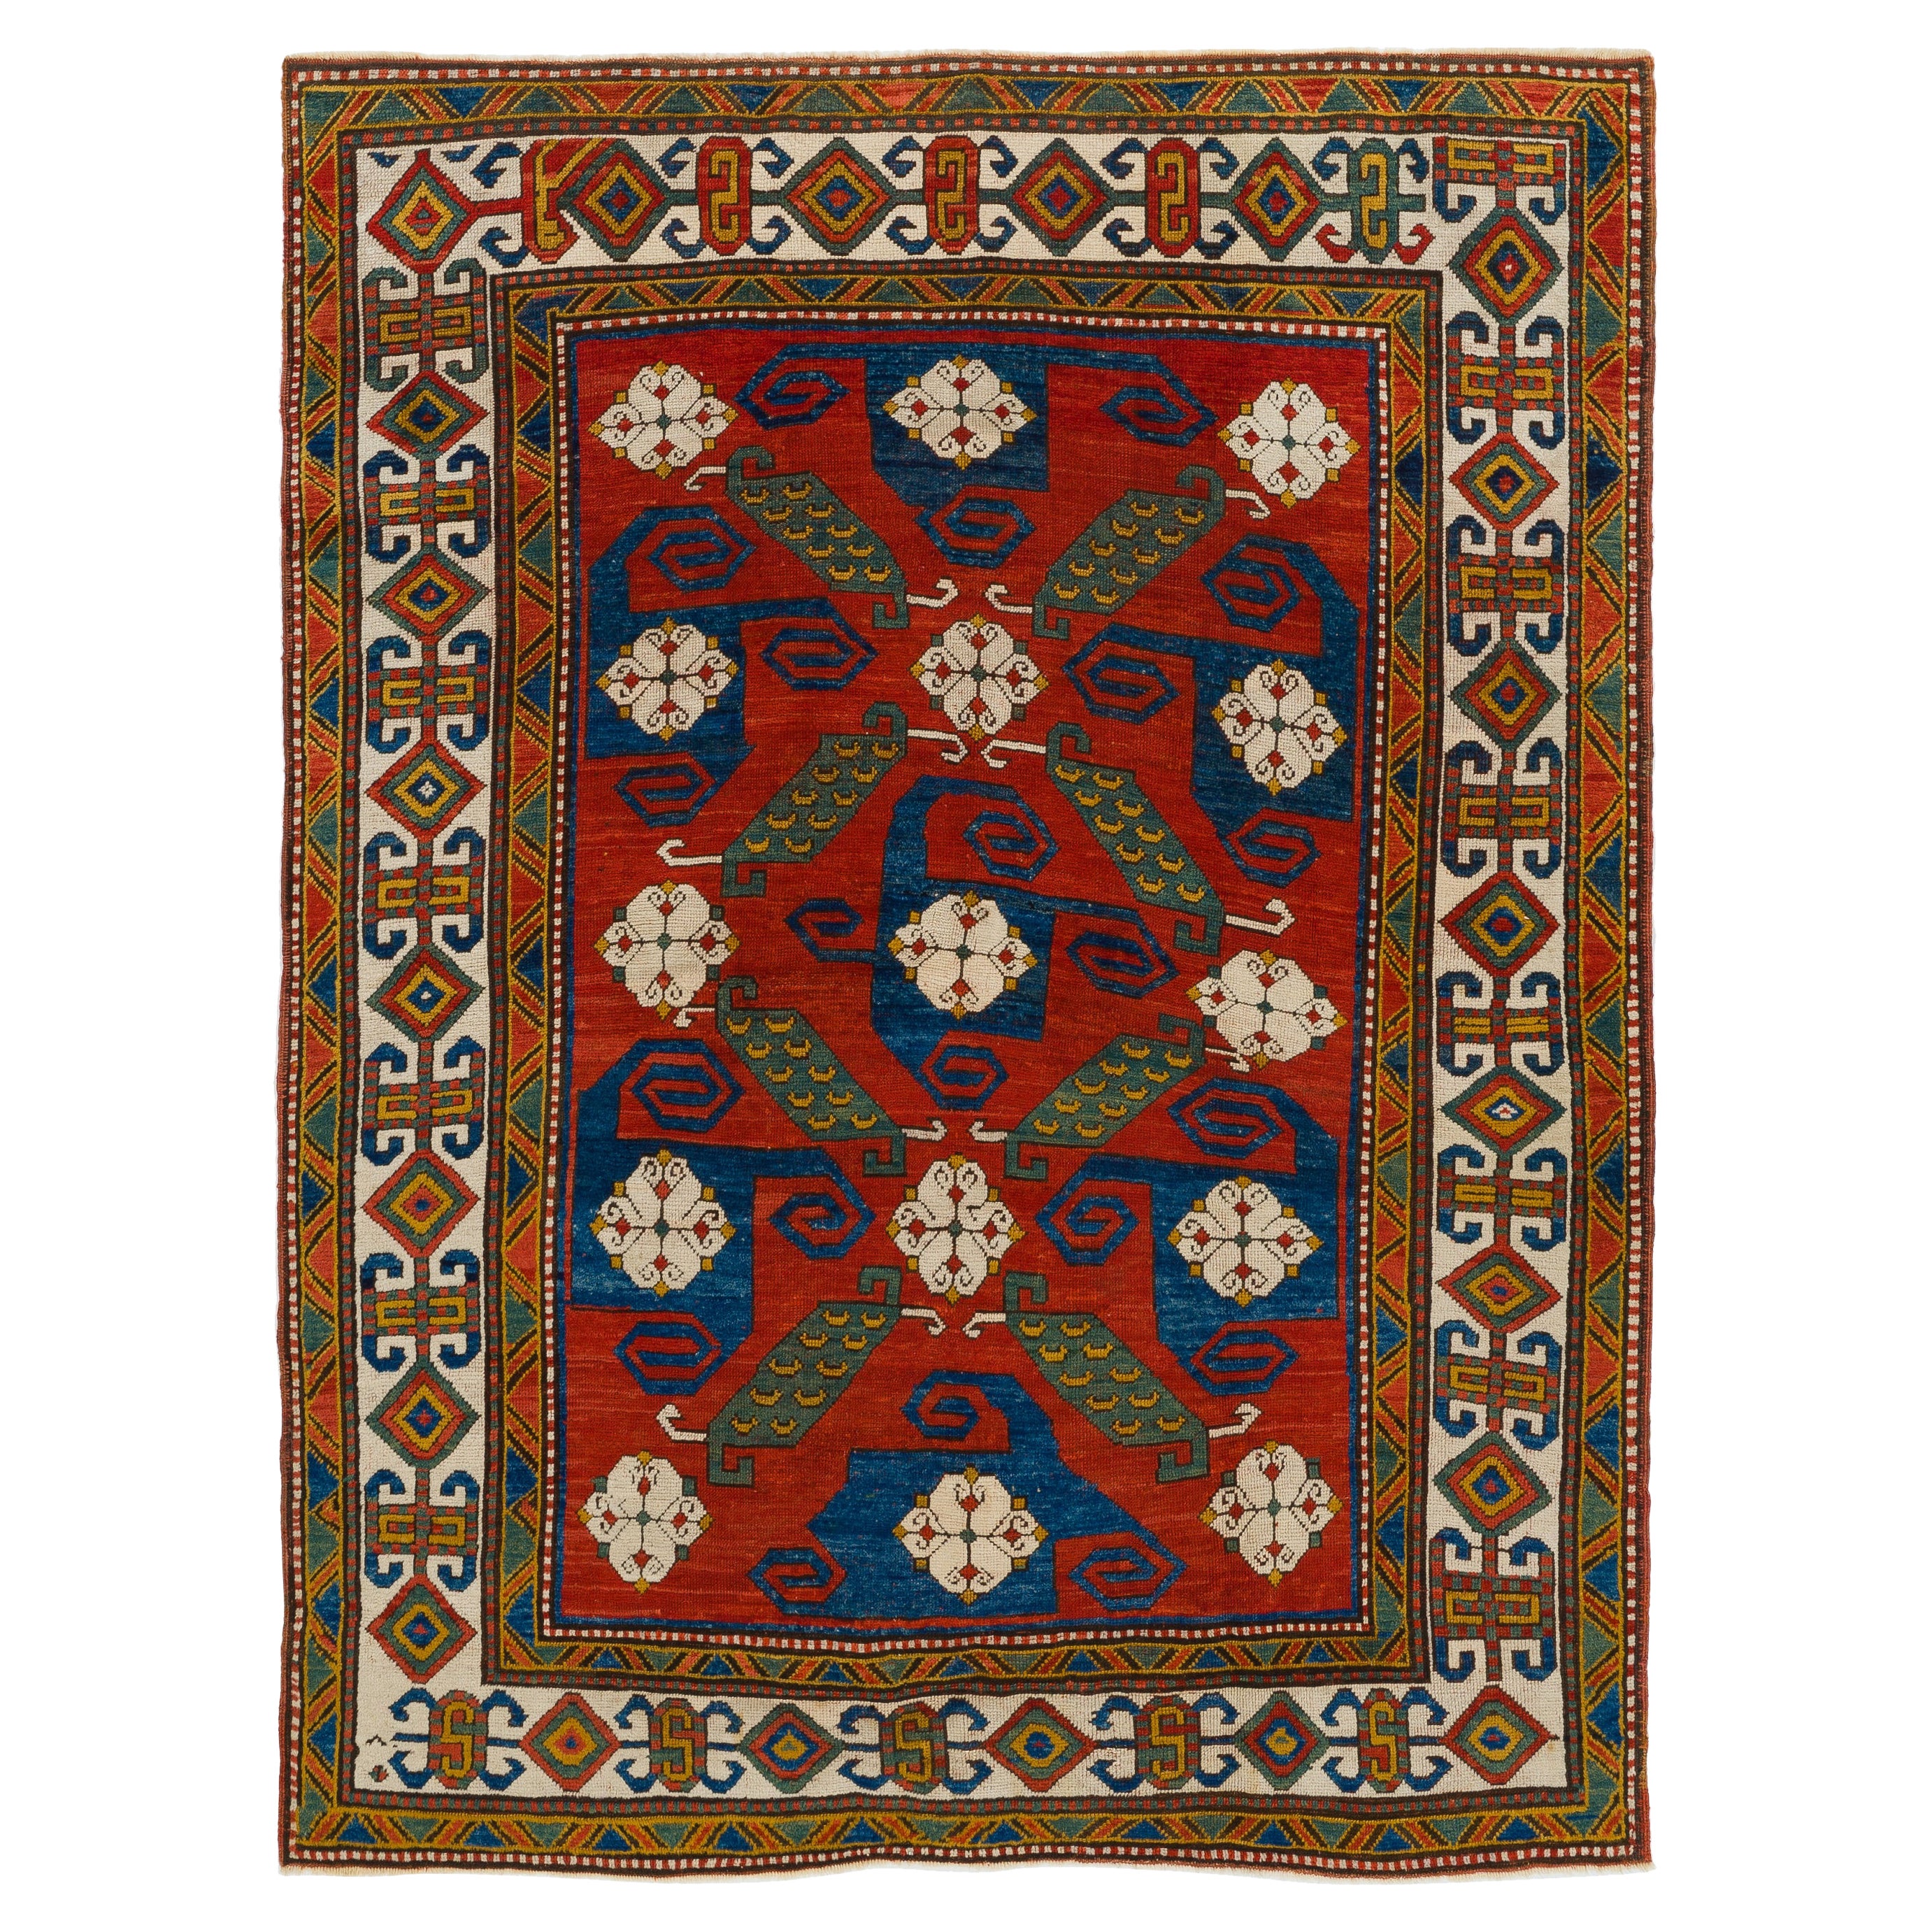 Antique Caucasian Pinwheel Kazak Rug. Top Shelf Collectors Carpet. 5'6" x 7'2" For Sale